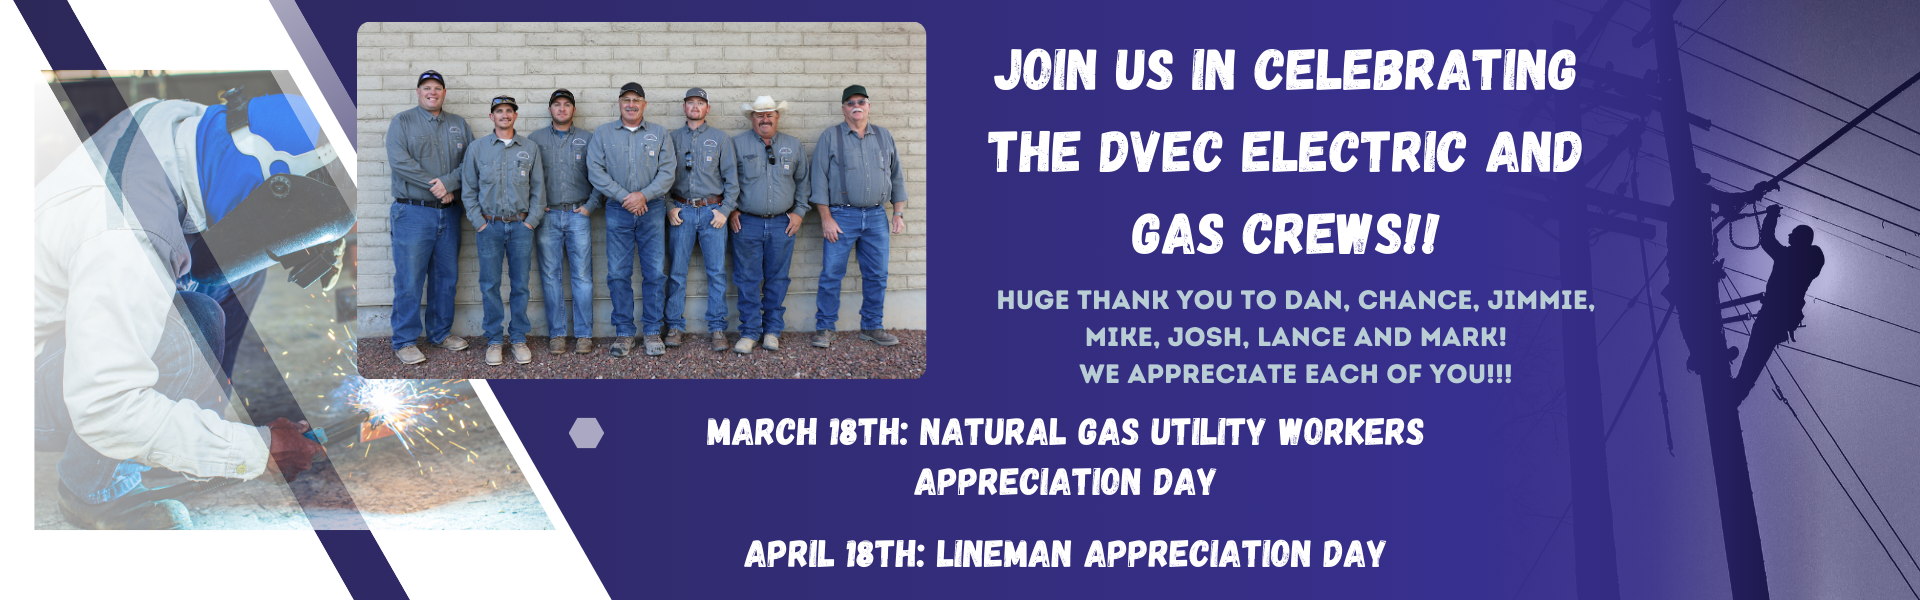 DVEC Line and Gas Crew Appreciation